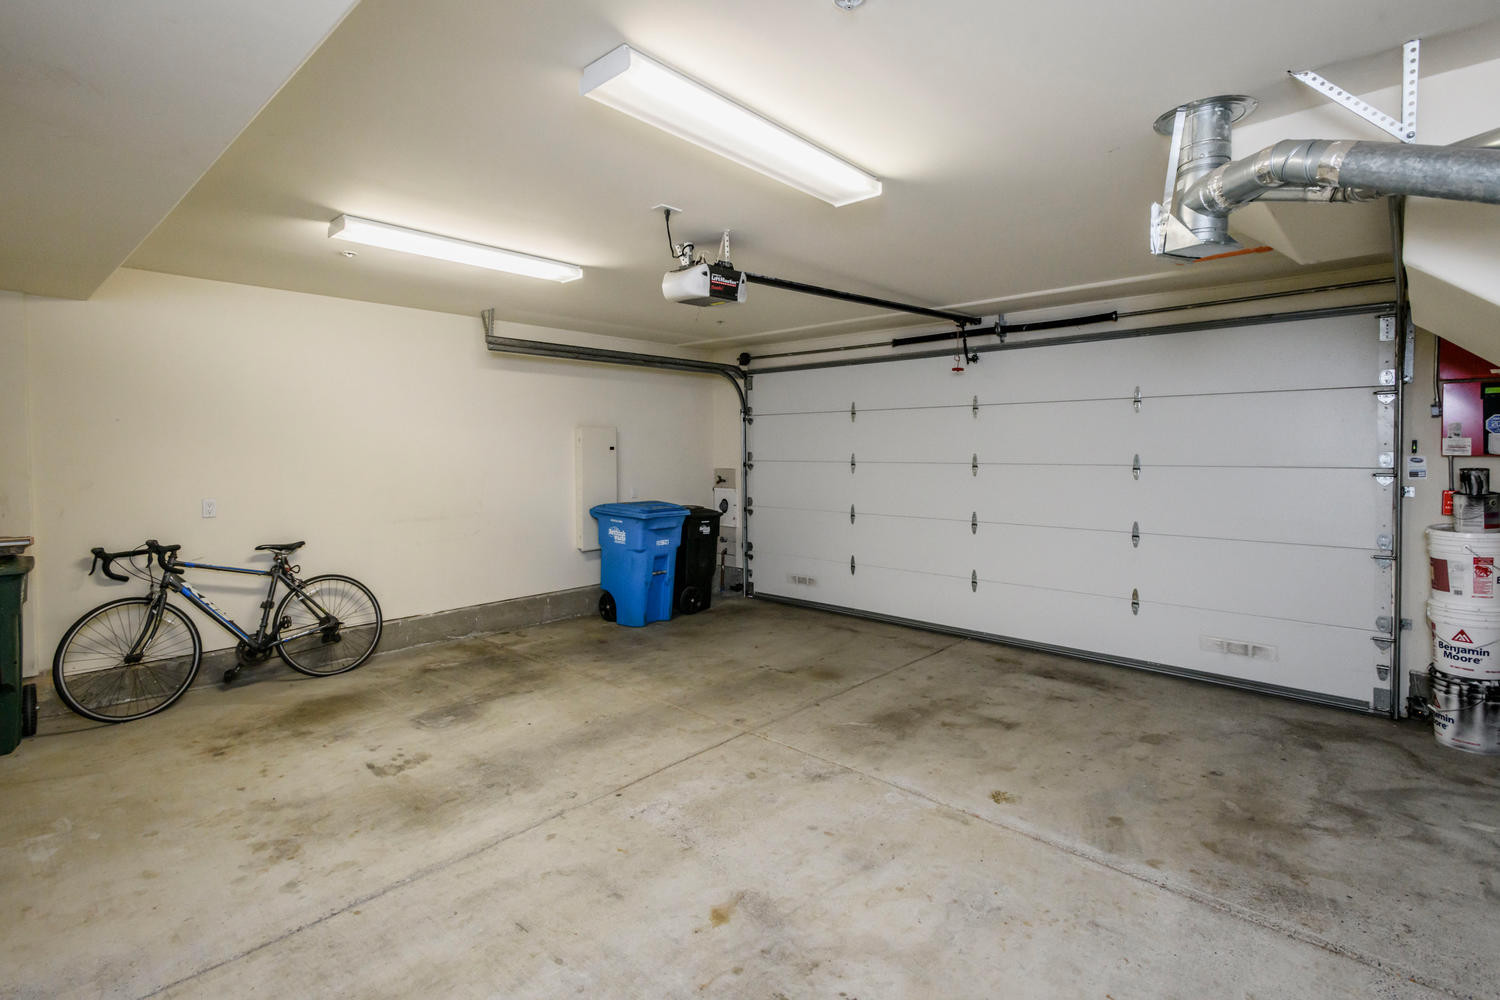 1137 Paloma Ave, Unit J Garage Interior in Burlingame Terrace Neighborhood in Burlingame.